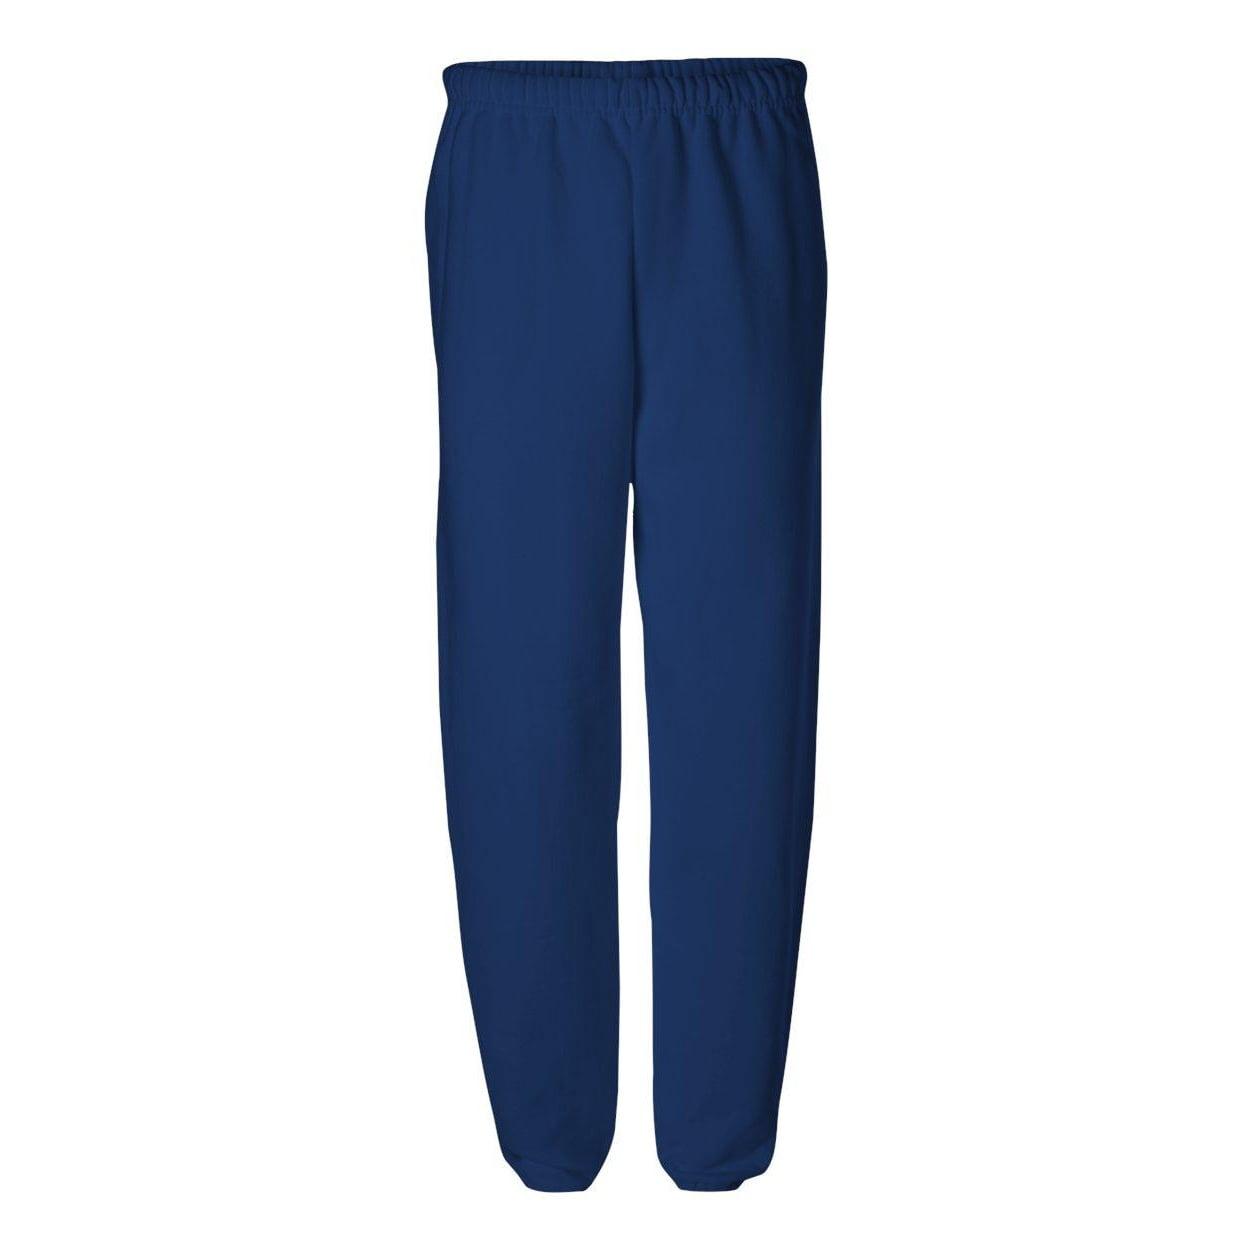 JERZEES - NuBlend Sweatpants - 973MR - Royal - Size: 2XL